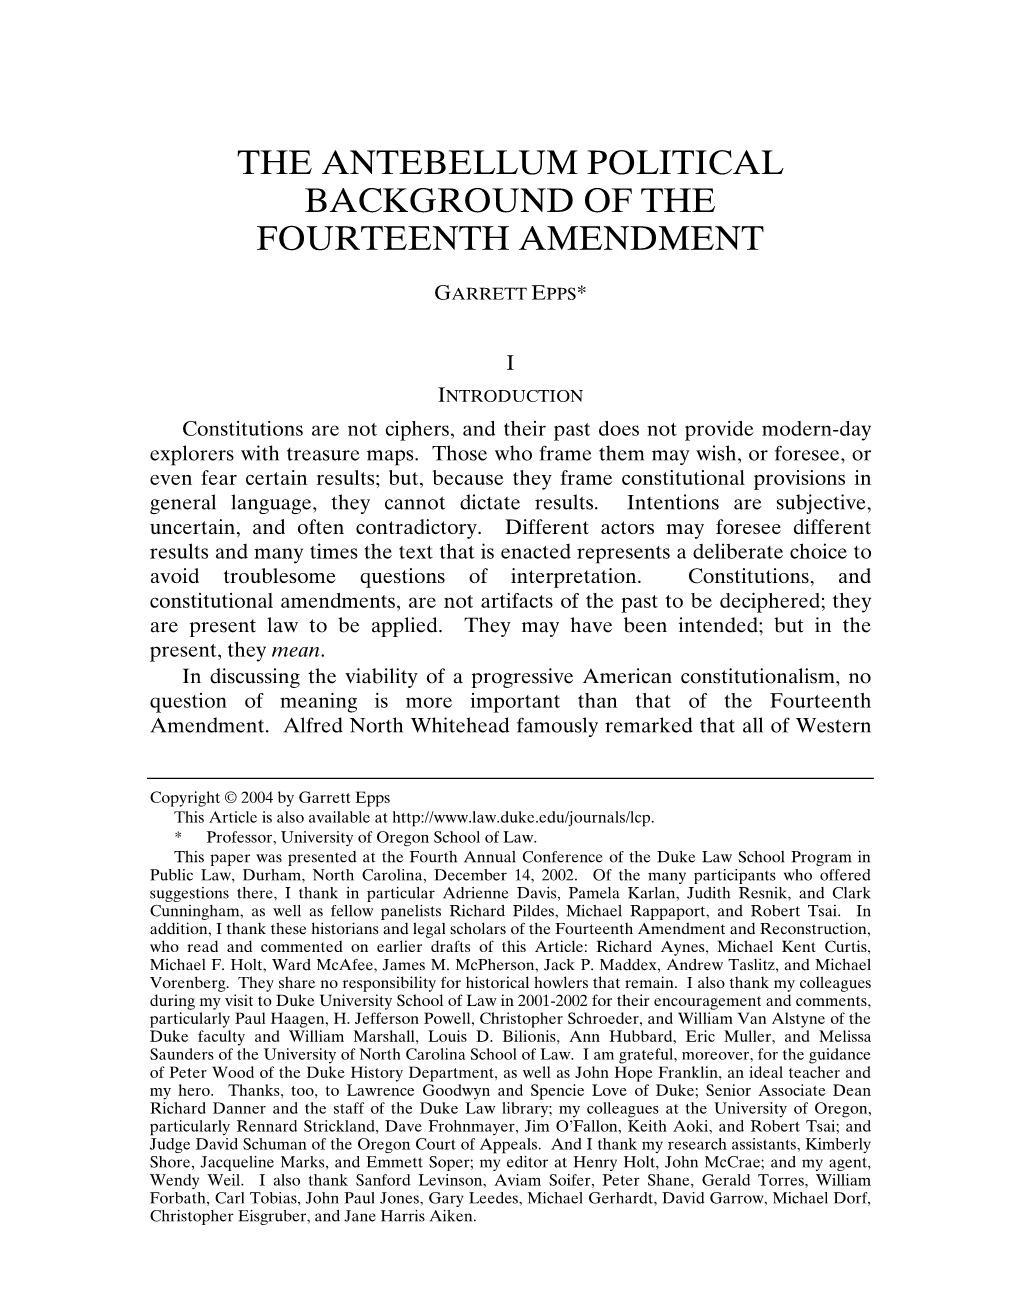 The Antebellum Political Background of the Fourteenth Amendment